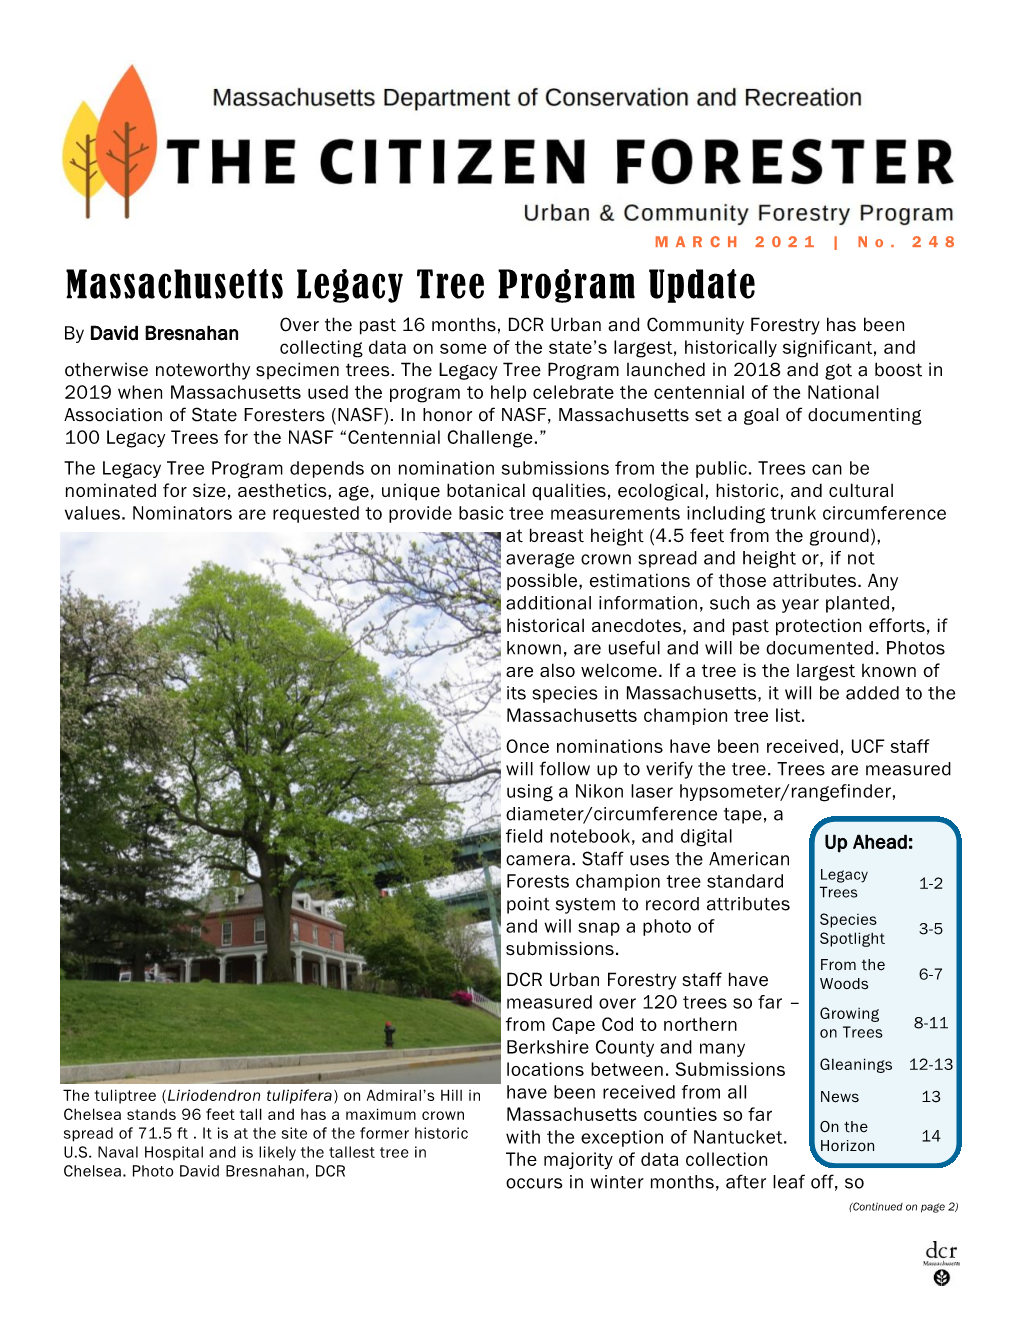 DCR Citizen Forester 03-21